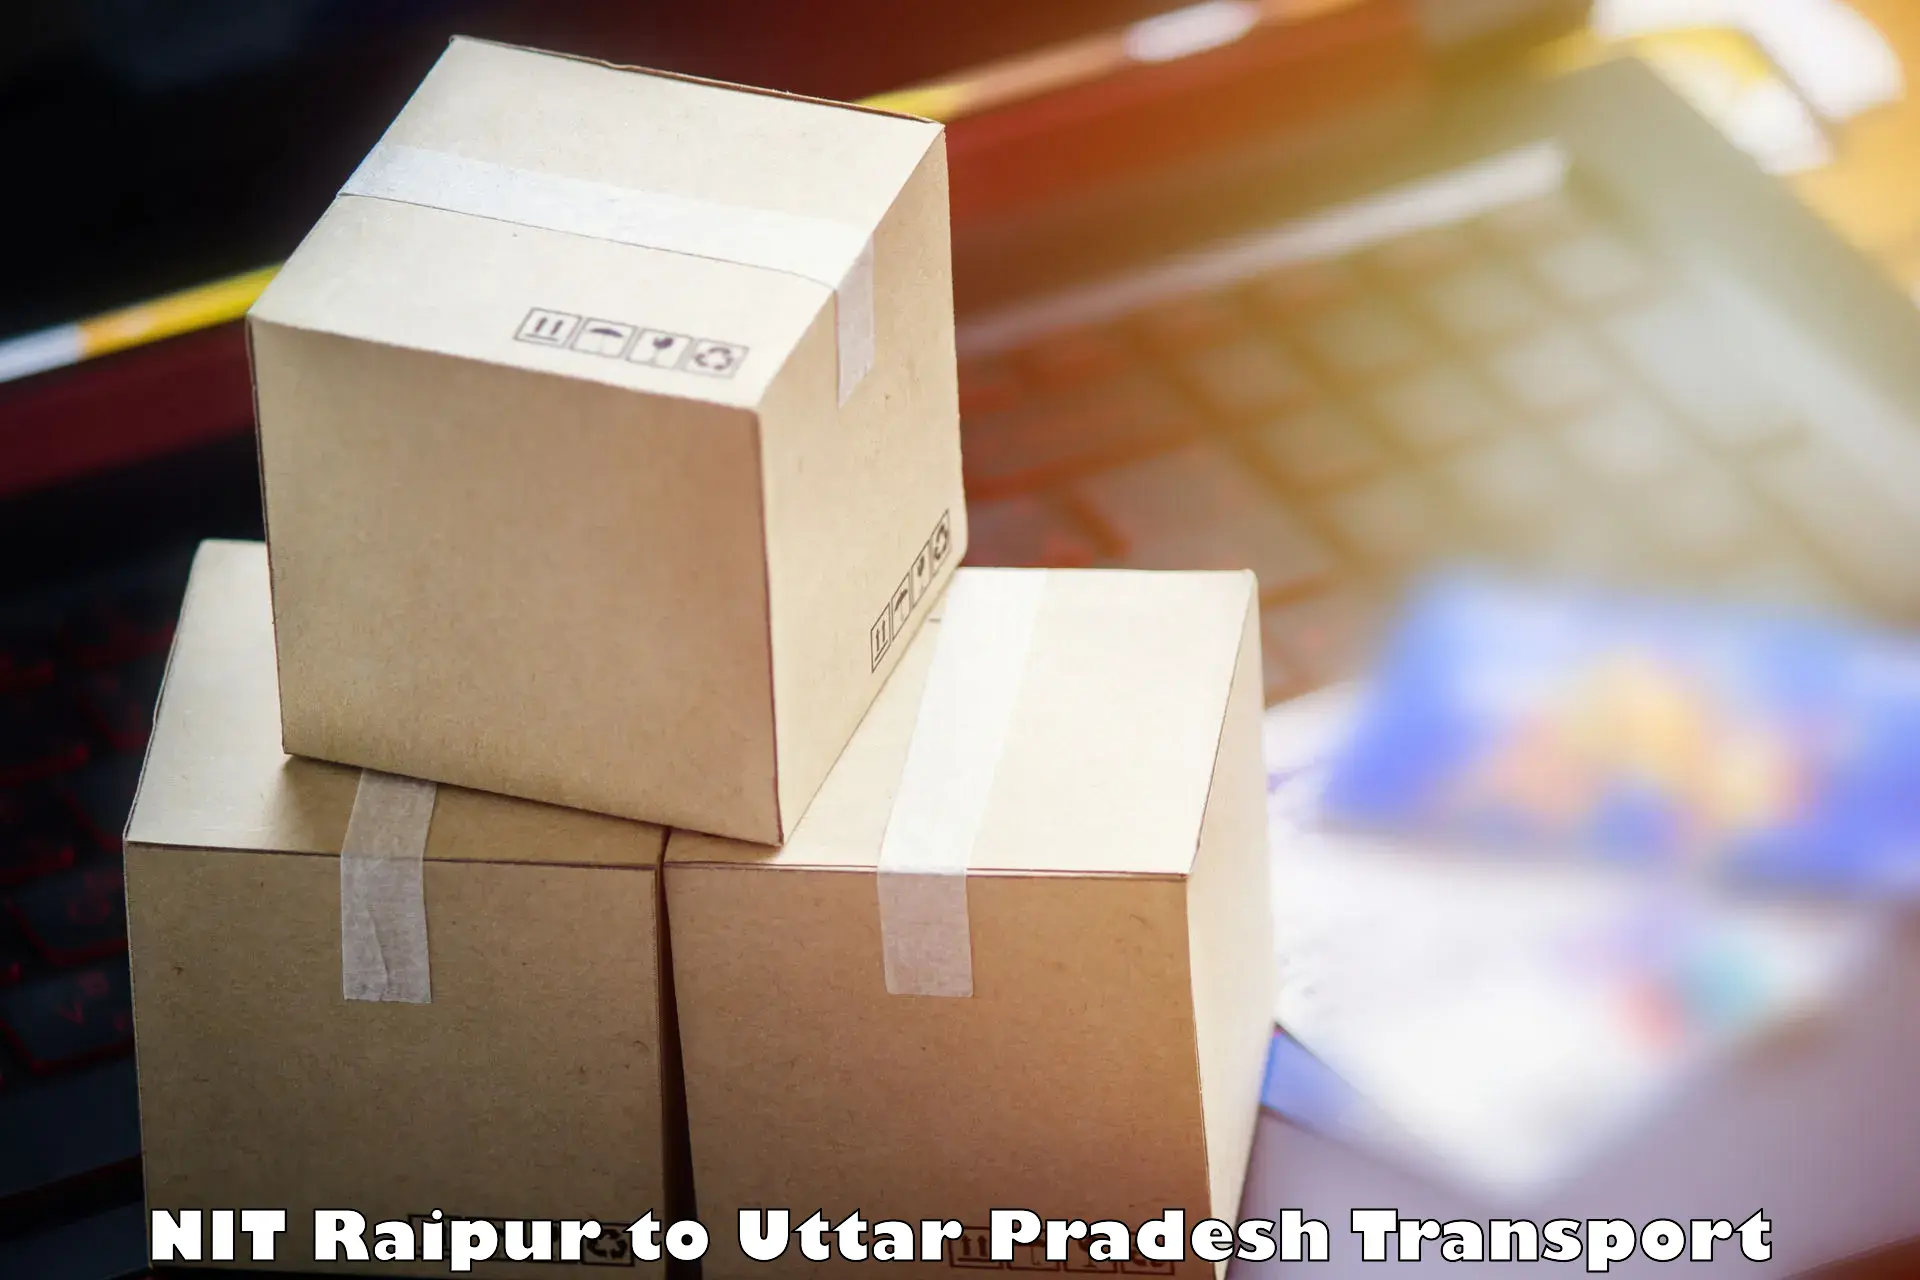 Delivery service NIT Raipur to Kaushambi